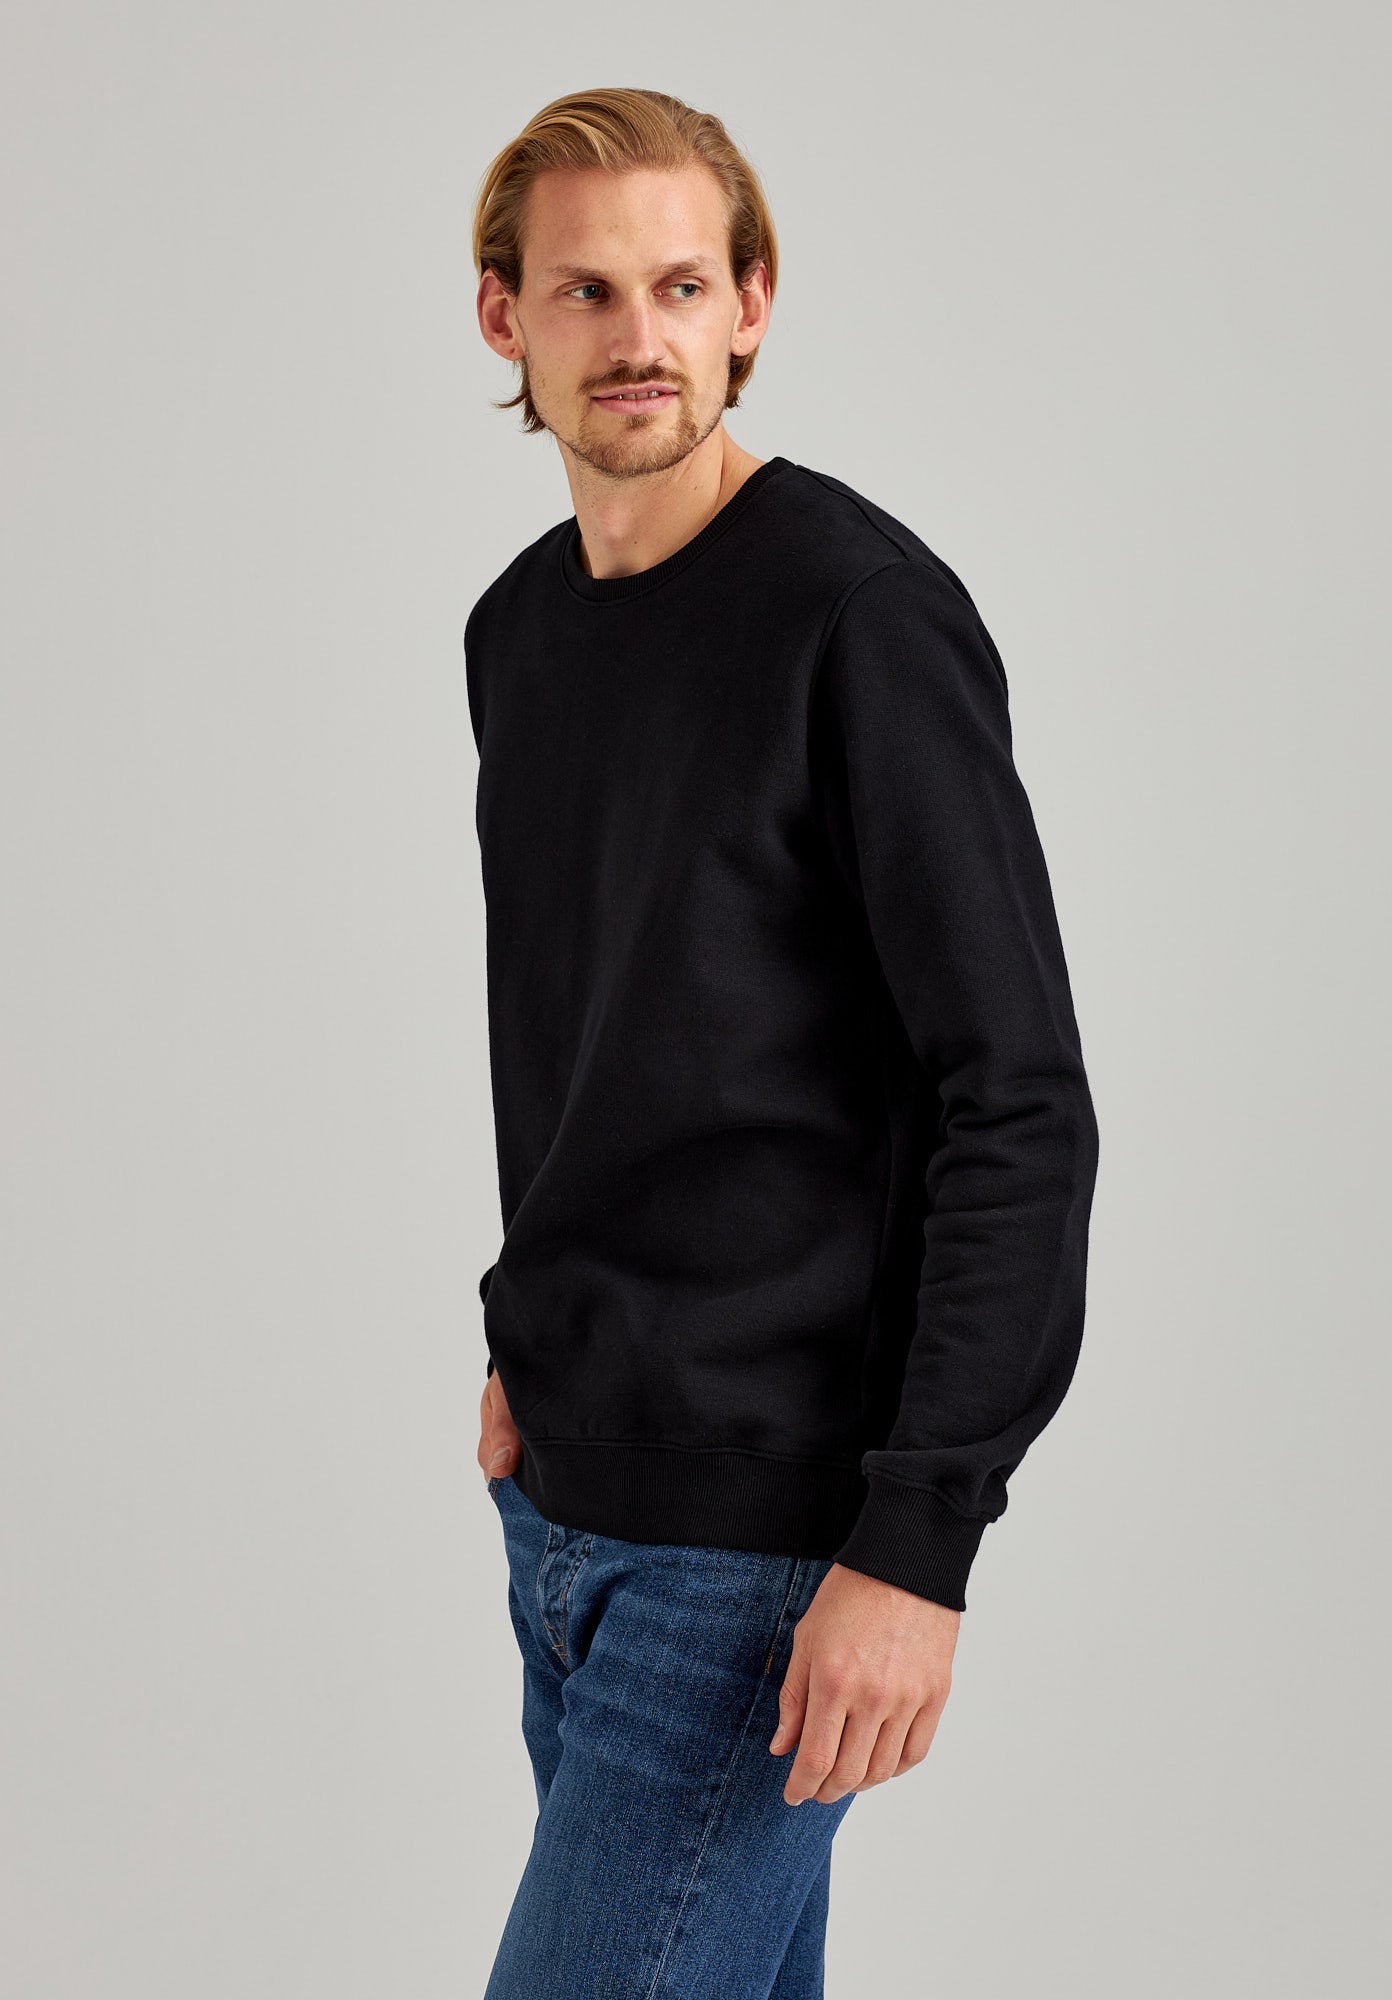 Black sweater TT1029 made of 100% organic cotton from Thokkthokk Sweater